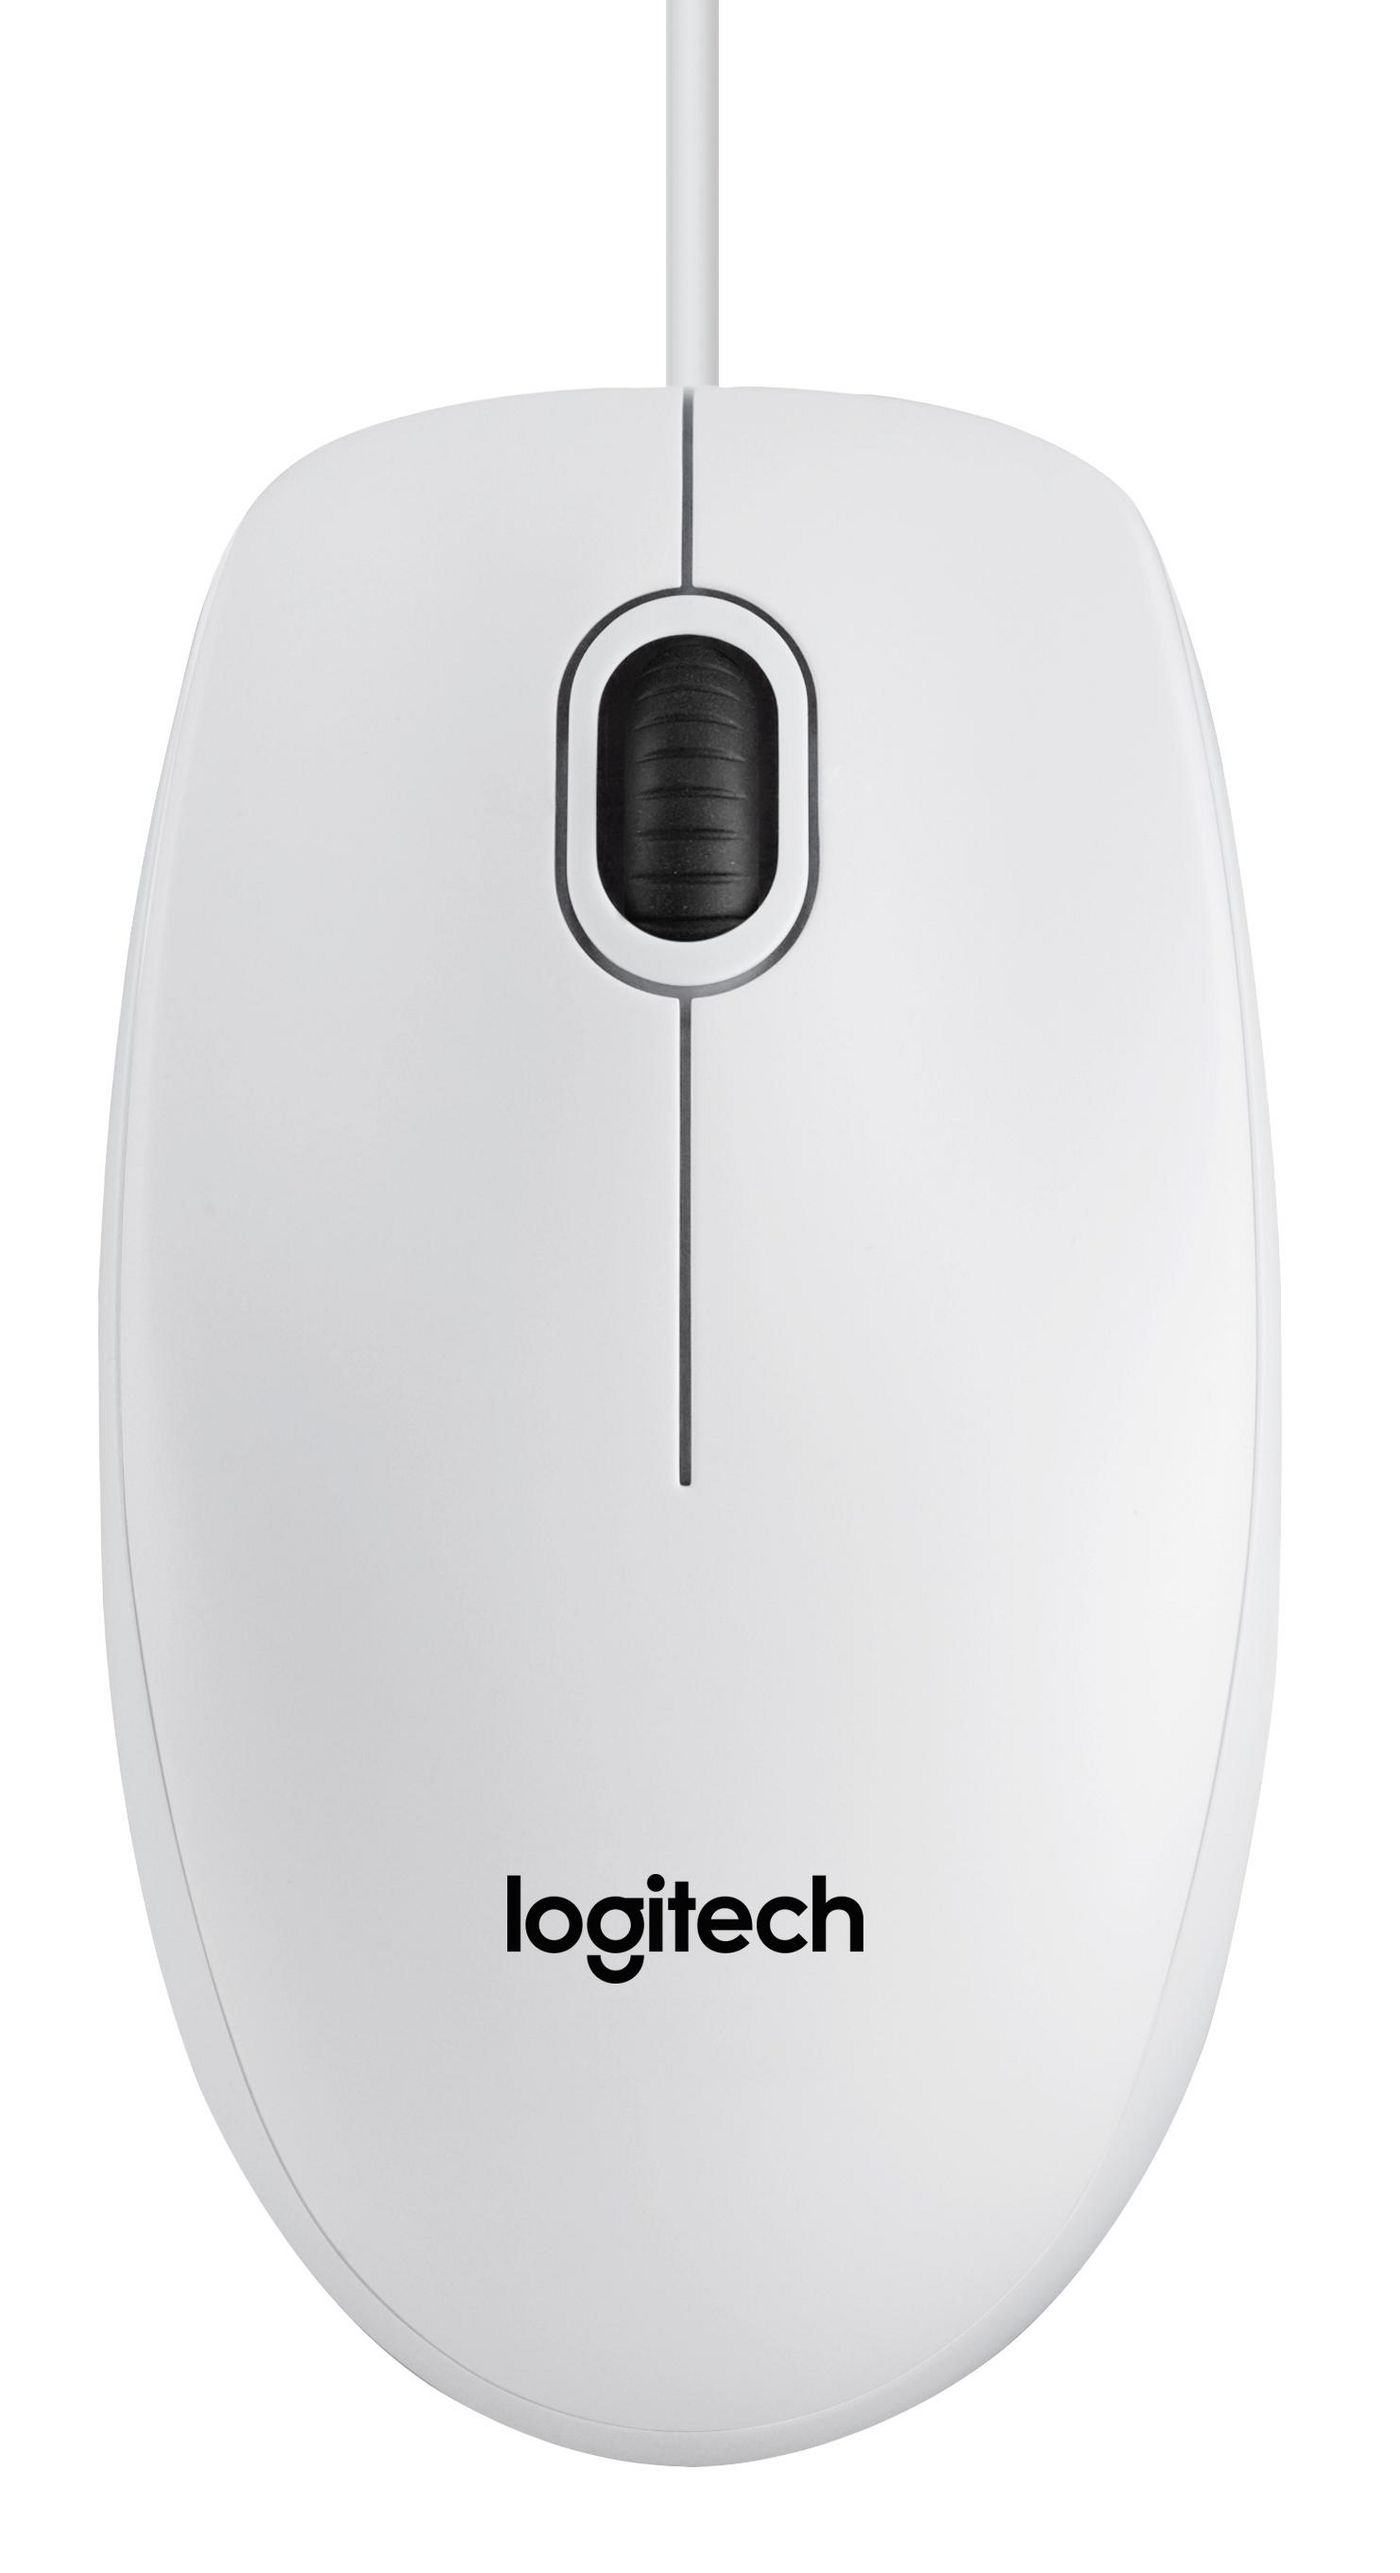 Logitech 910-003360 B100, Corded mouse,White 